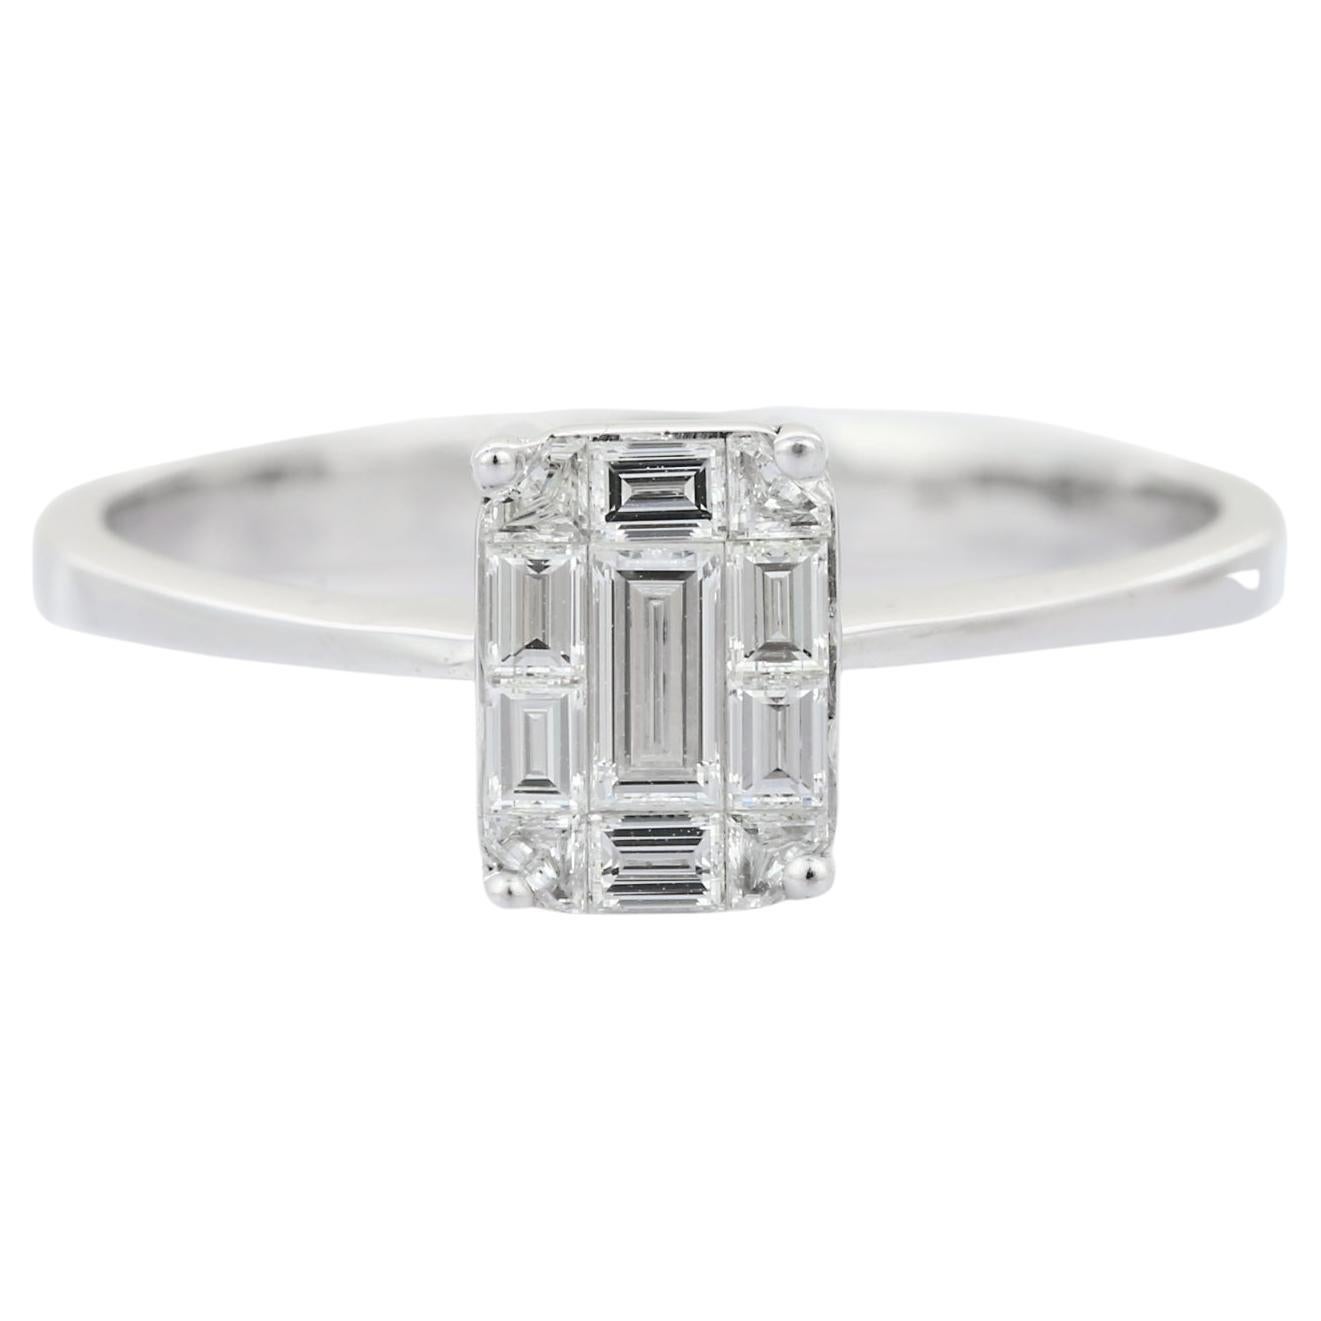 For Sale:  18K White Gold Diamond Cluster Engagement Ring